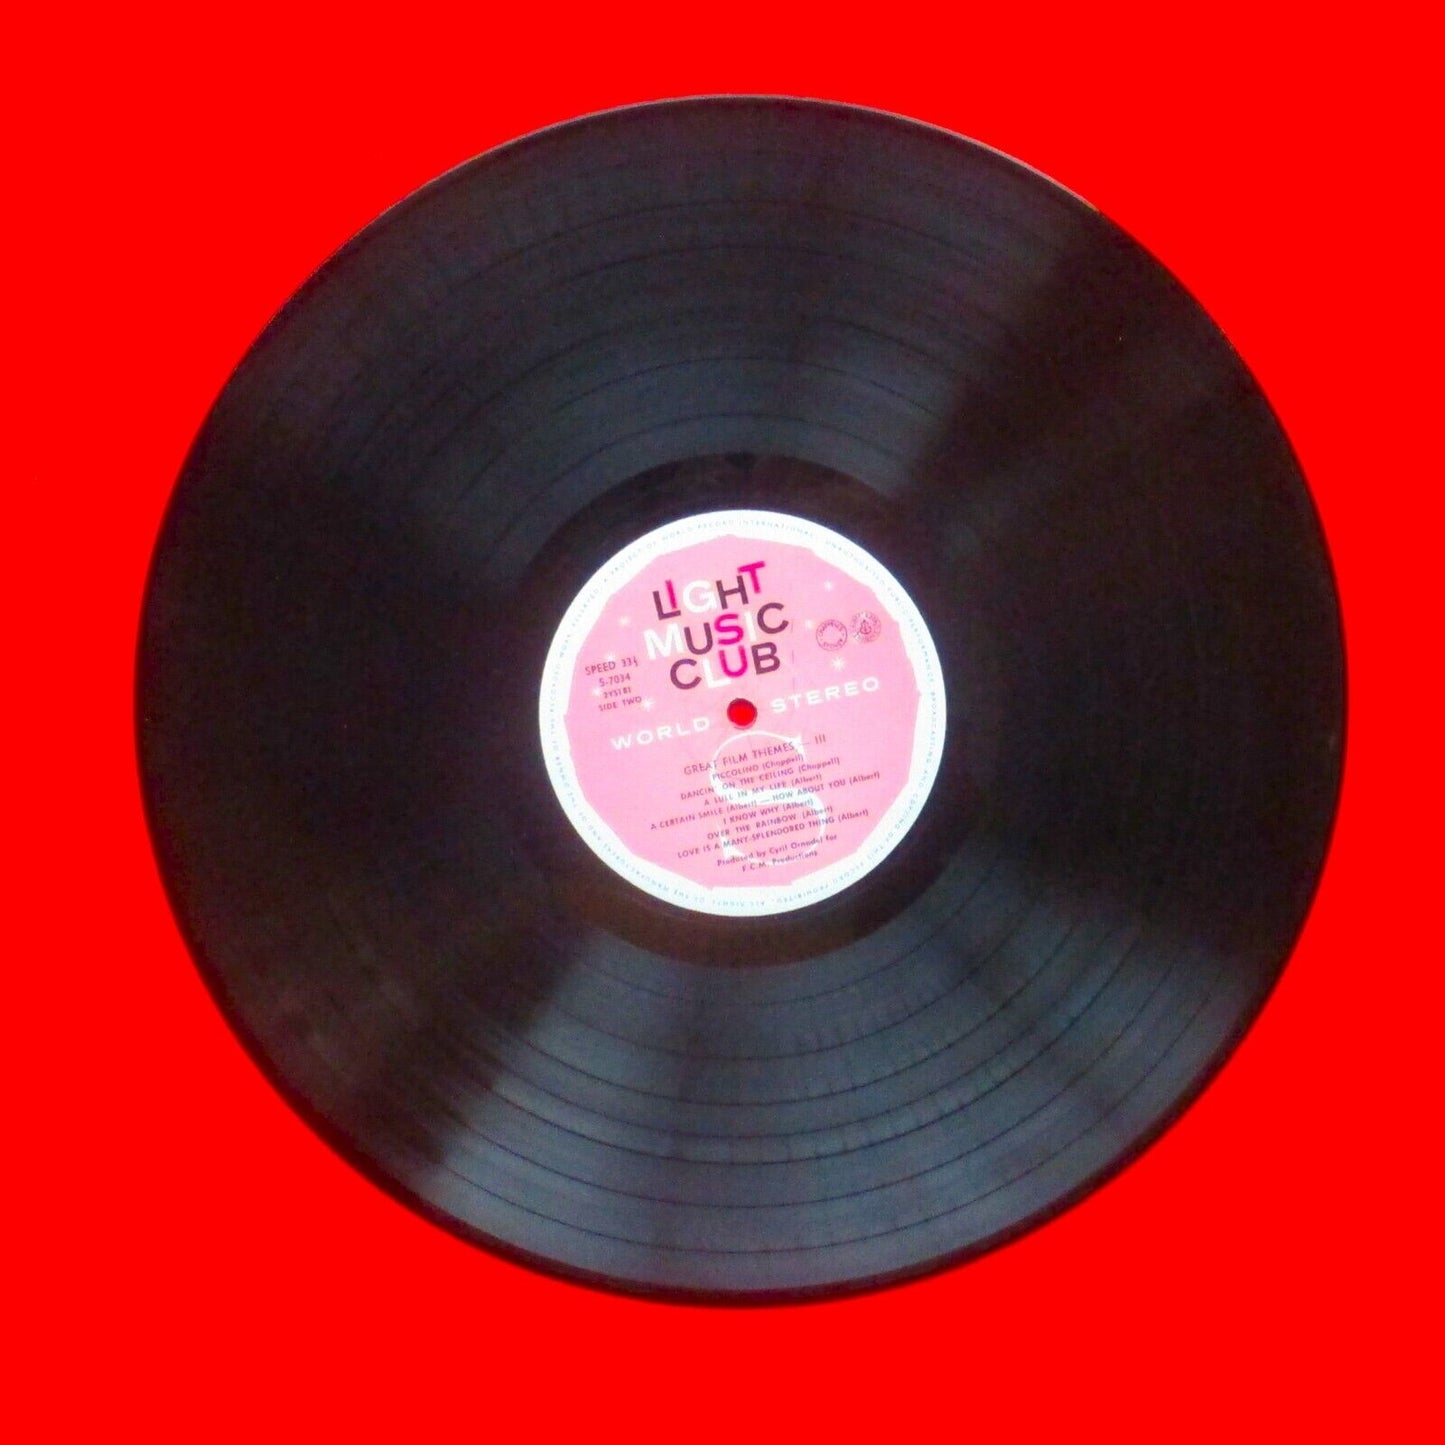 Bobby Richards' Orchestra Great Film Themes III Vinyl Album LP 1962 Pressing